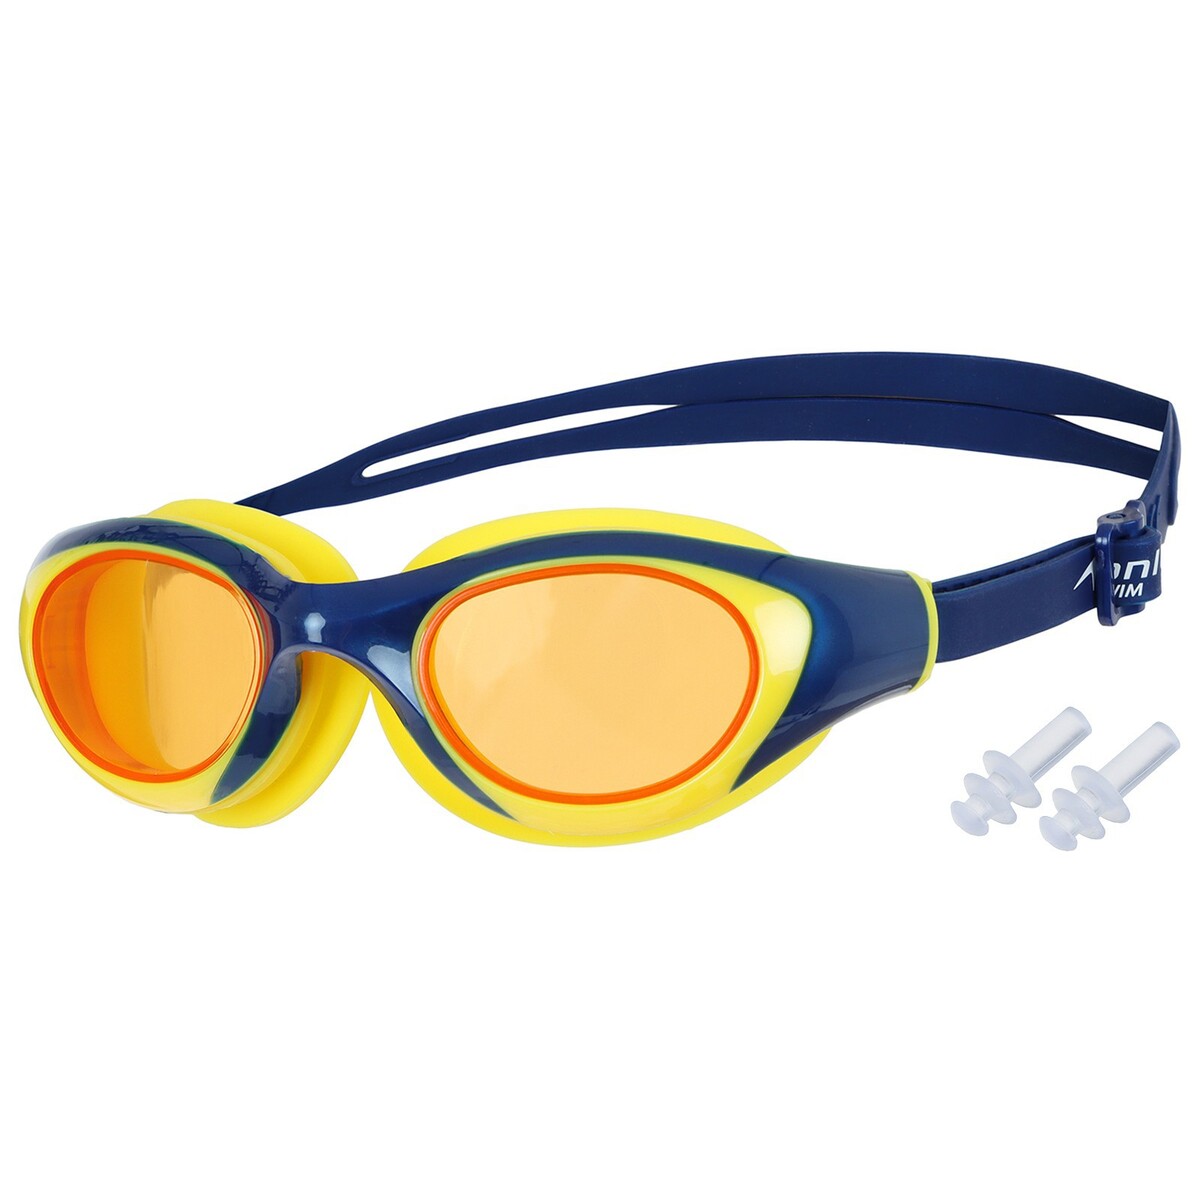 Очки для плавания onlytop, беруши, uv защита очки для плавания speedo futura classic 8 10898b572a